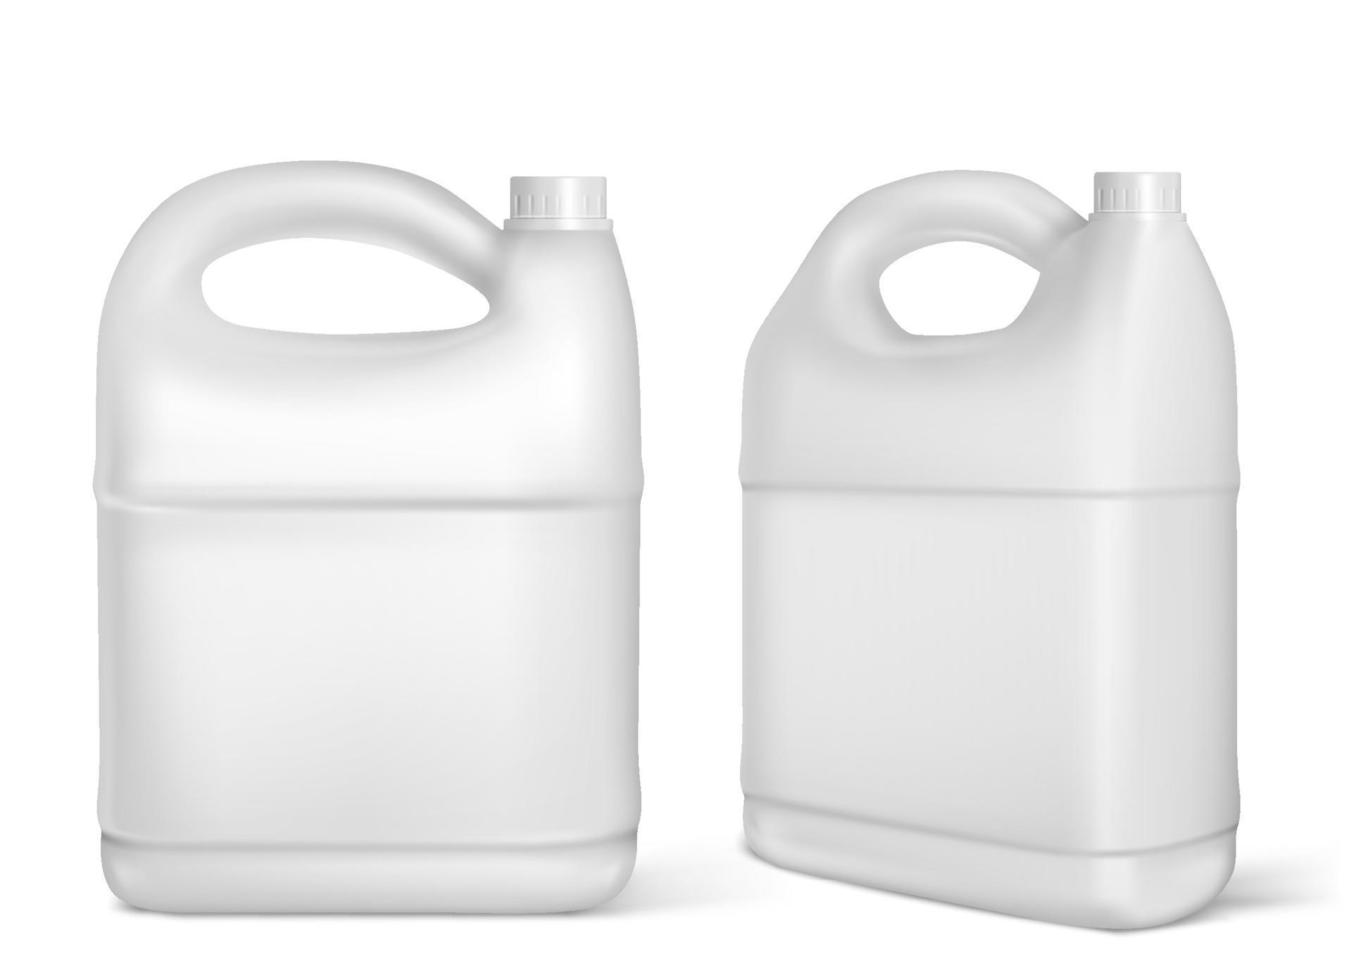 vasilhas de plástico, garrafas isoladas de jerrycan branco vetor